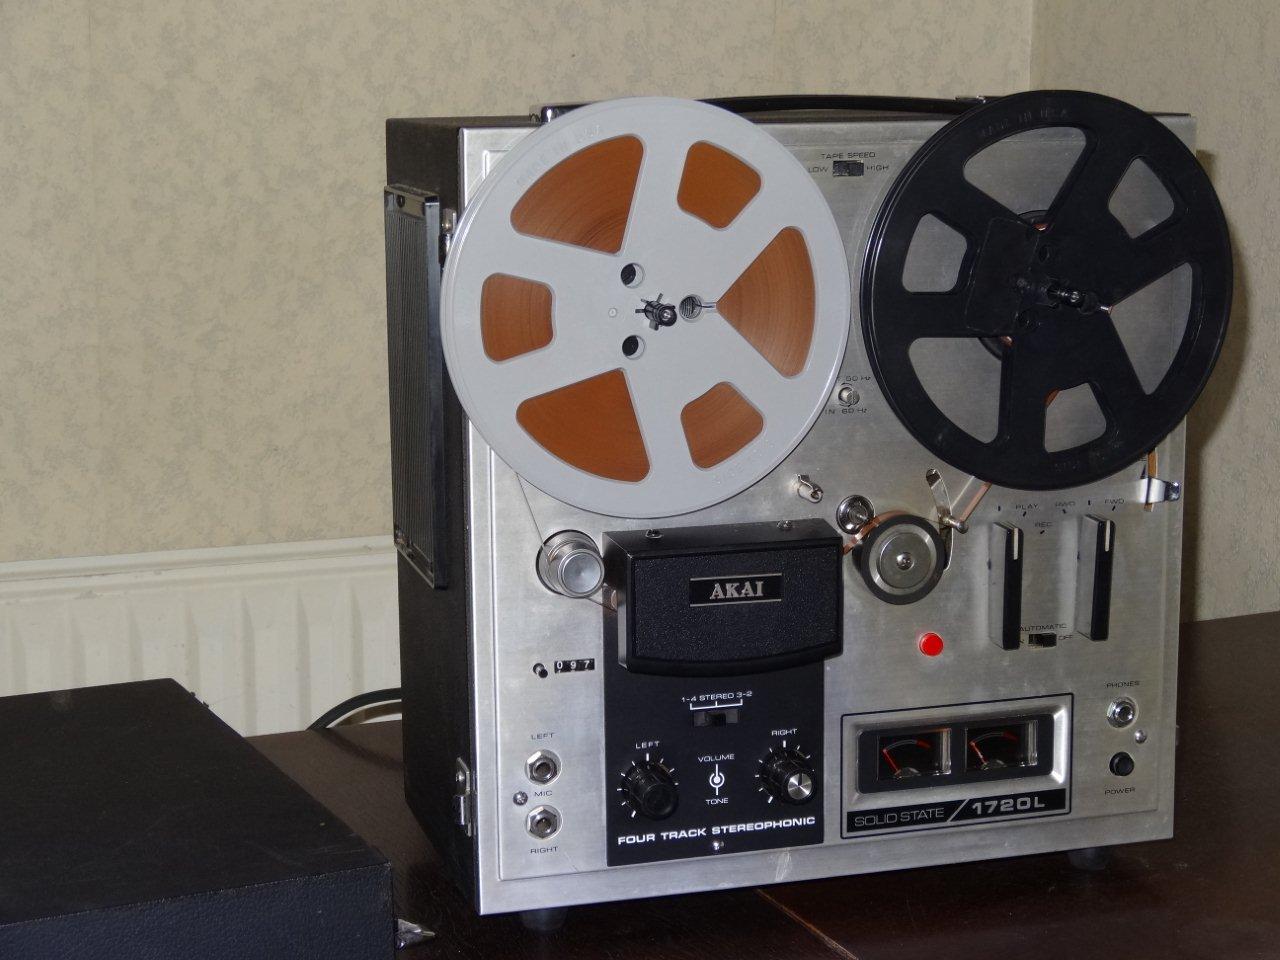 Akai 1720L tape recorder (1969) – The Technojunk Files